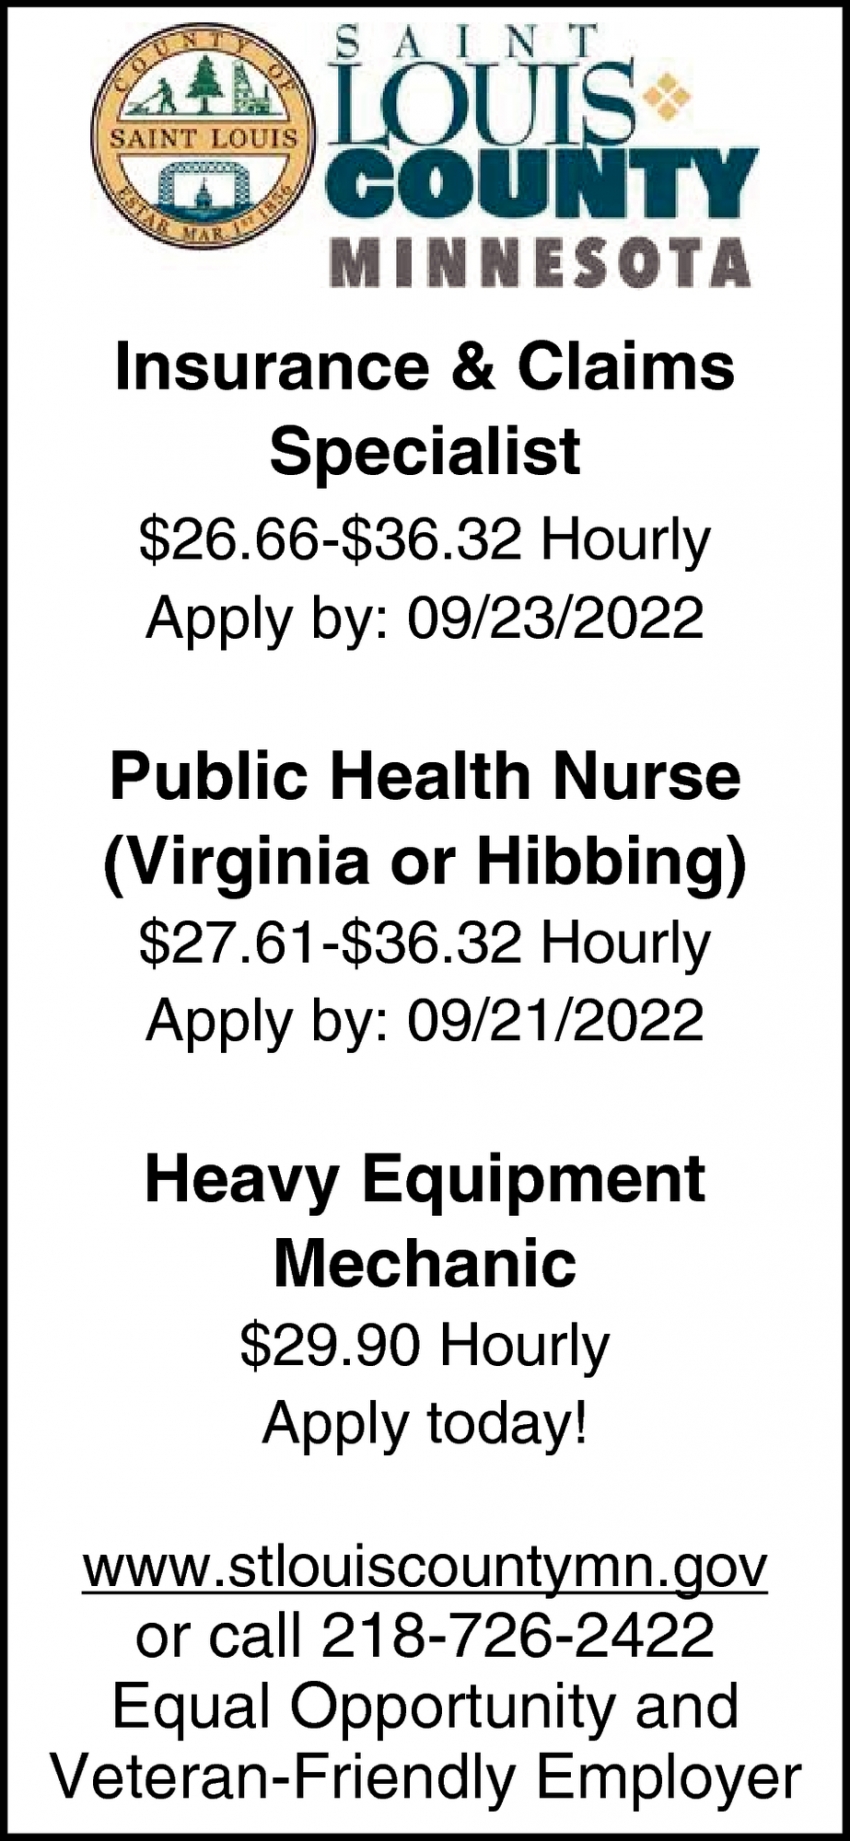 Insurance & Claims Specialist, Public Health Nurse, Heavy Equipment Mechanic